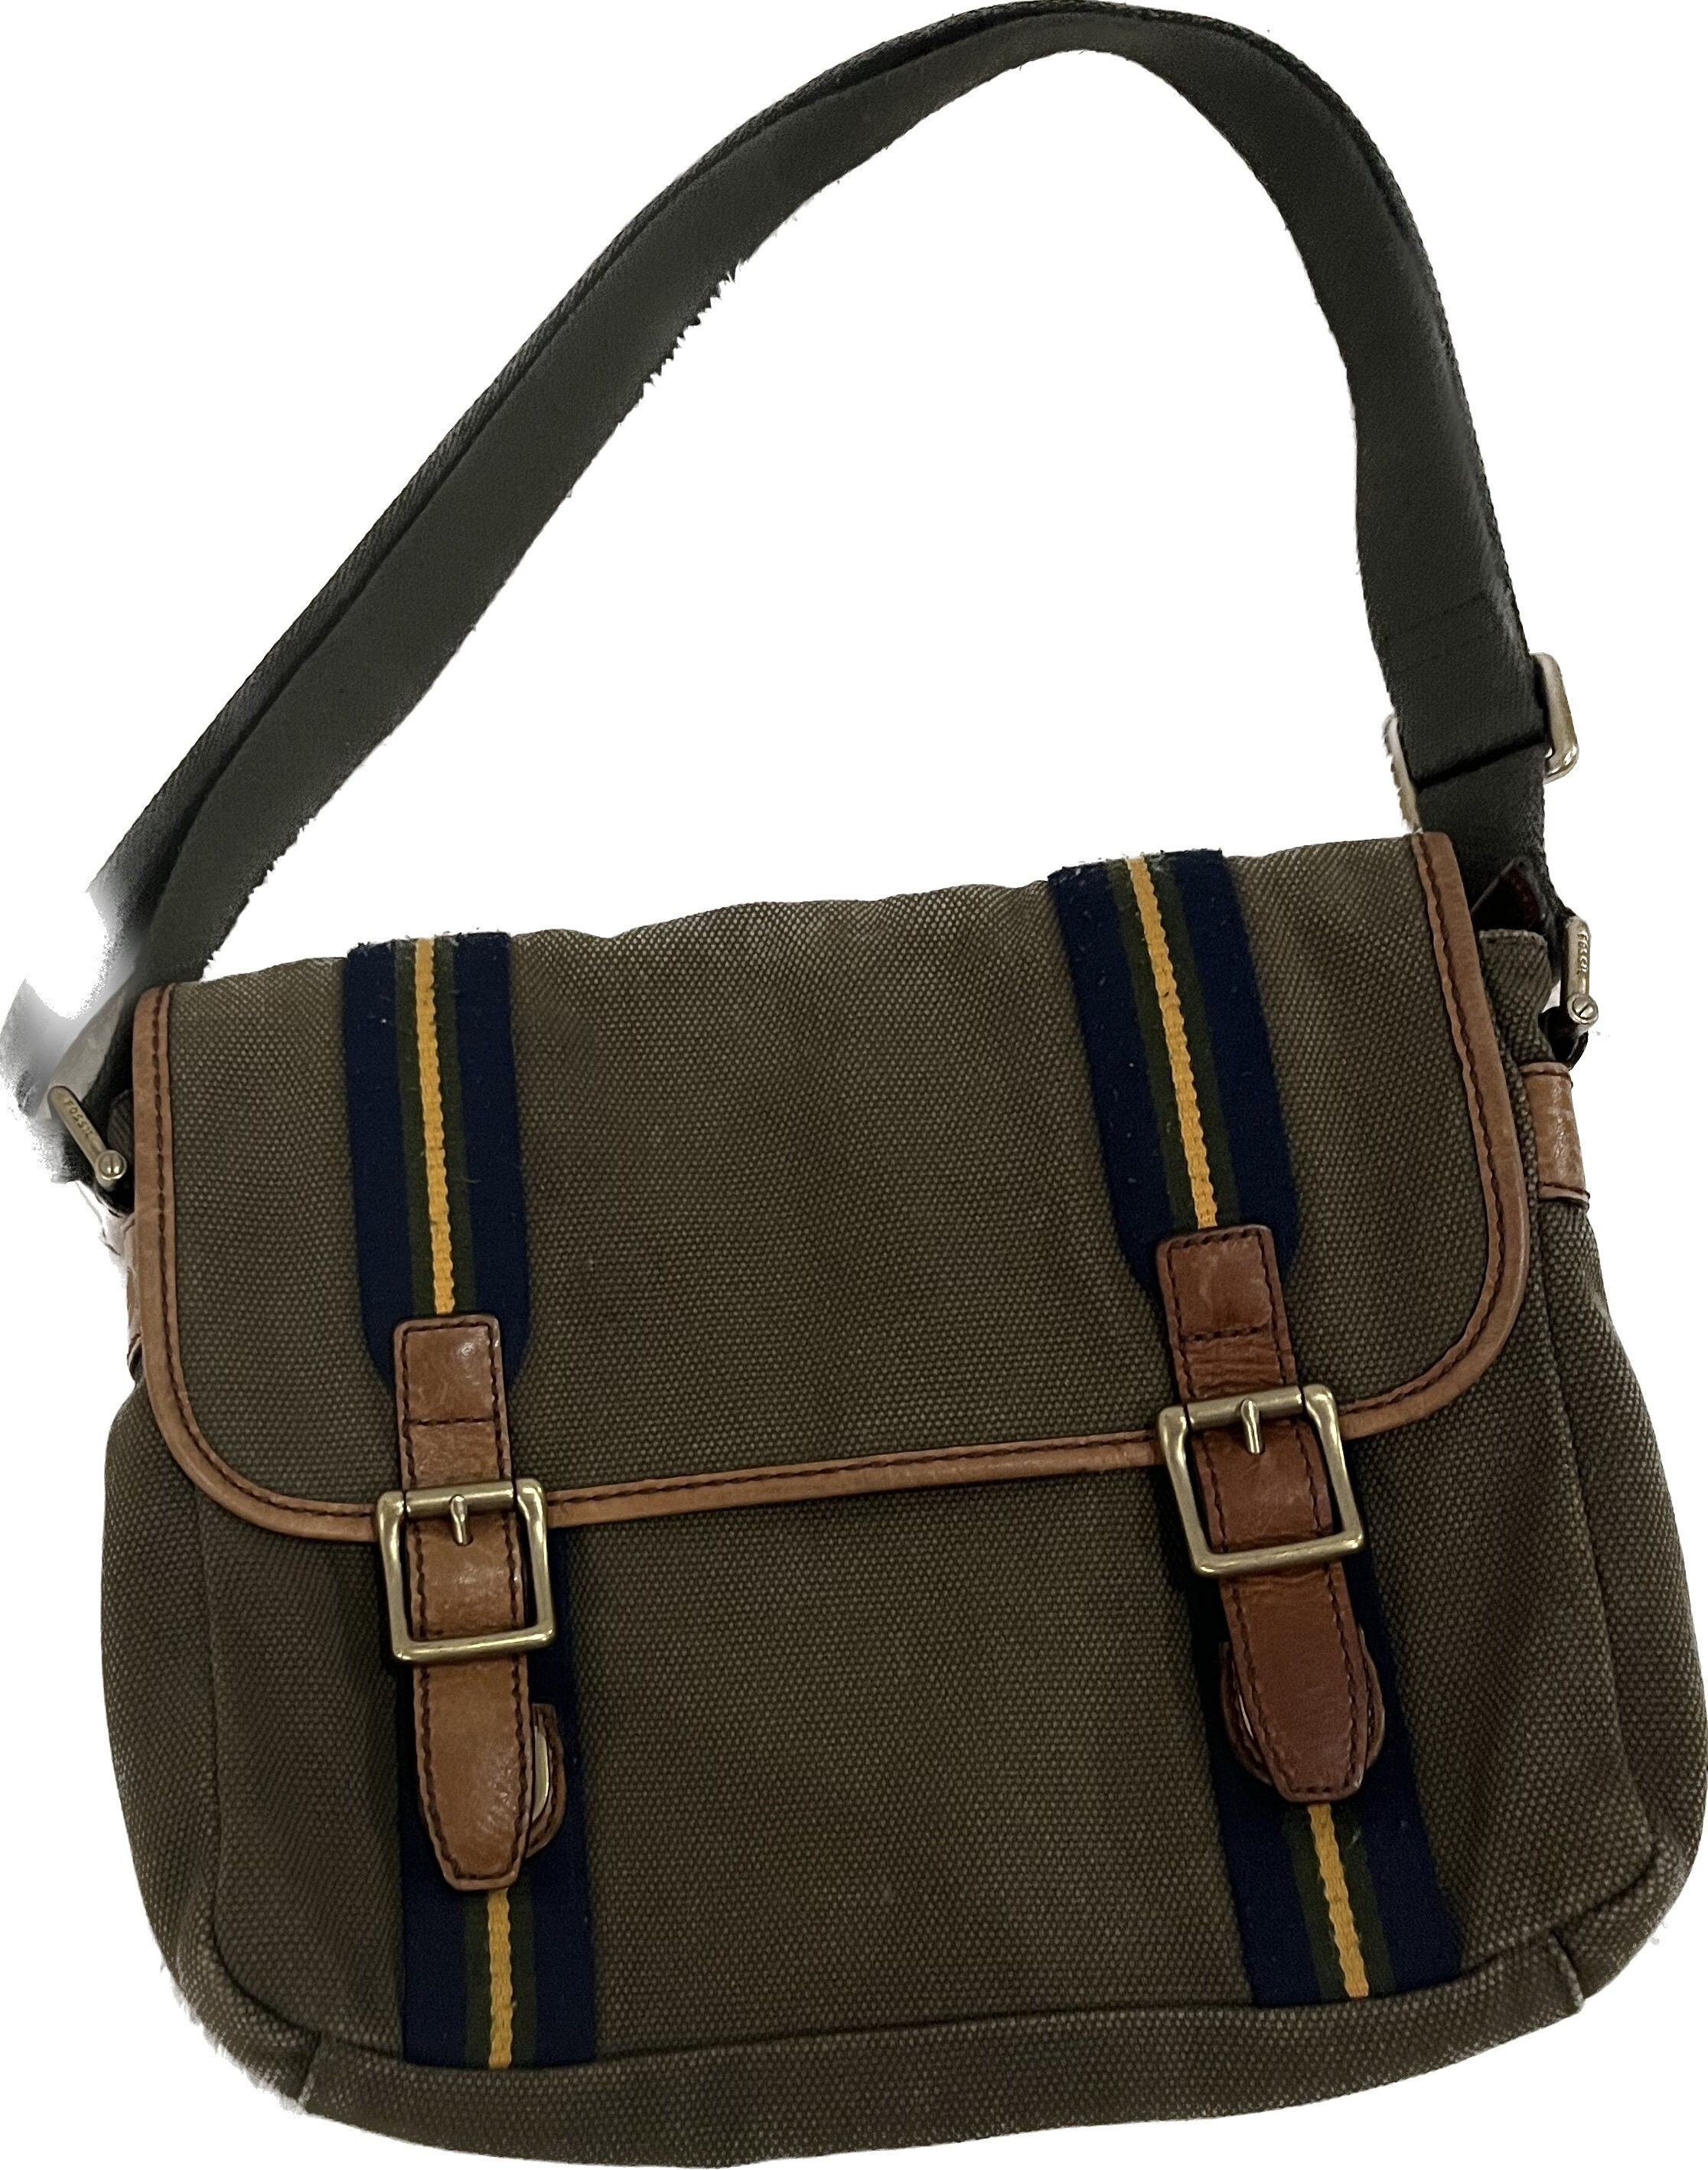 FOSSIL Estate Leather Messenger Bag, 2-Tone Dark Brown, Canvas Strap